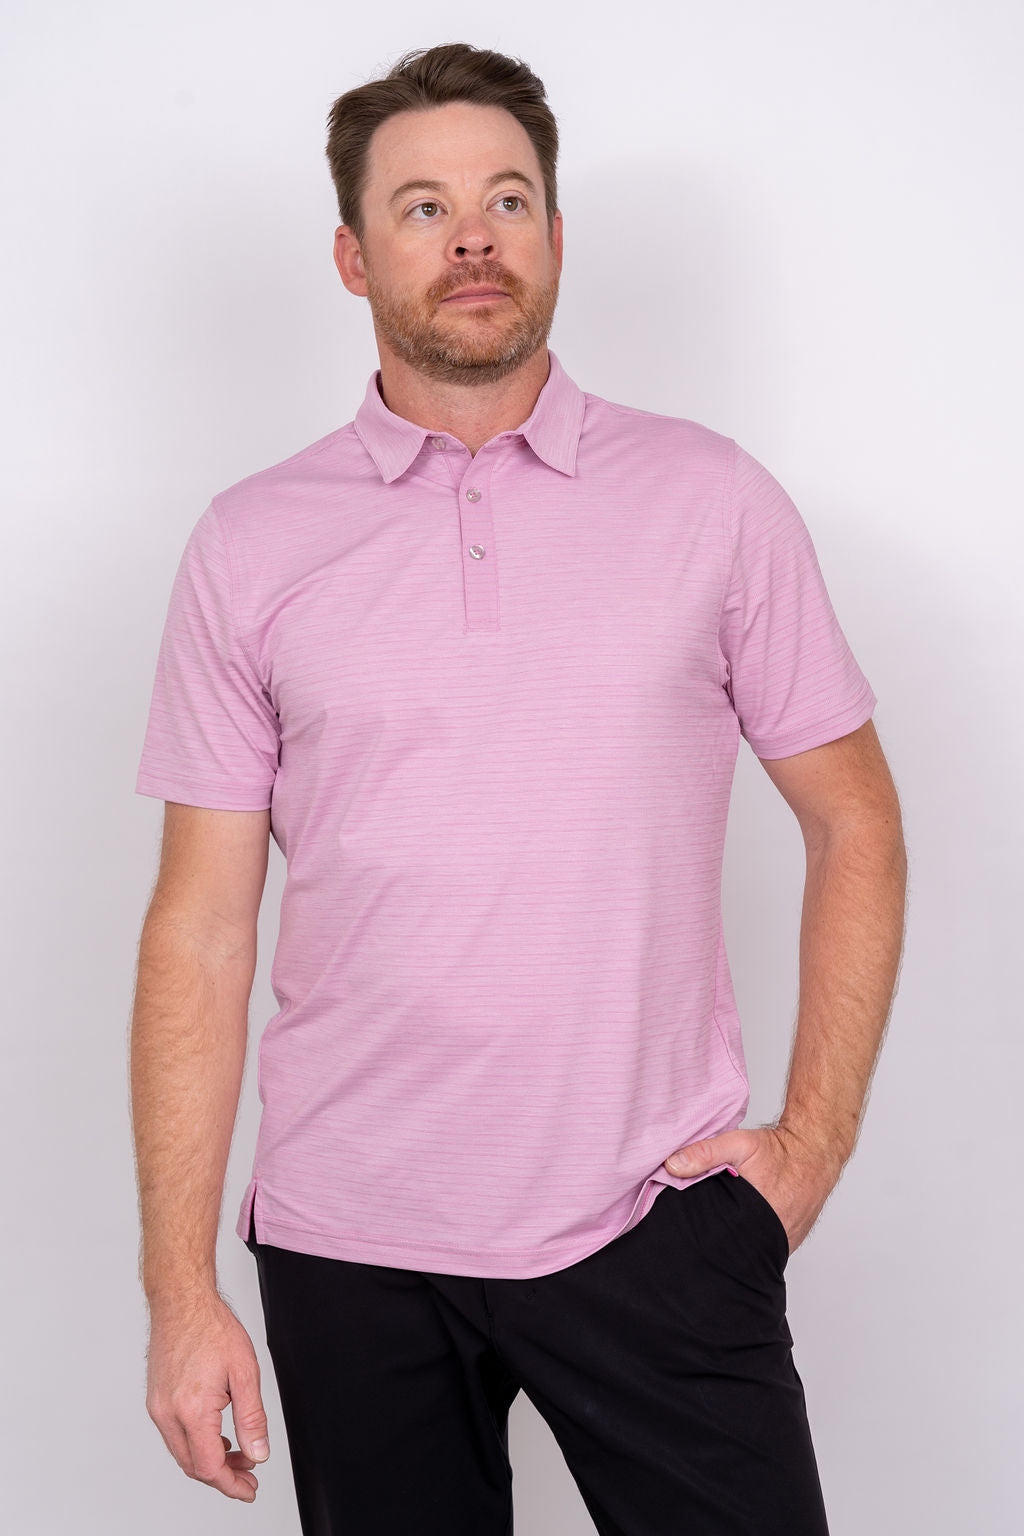 TJ Premier Golf Shirt - Pink Men's Golf Shirt Taylor Jordan Apparel 